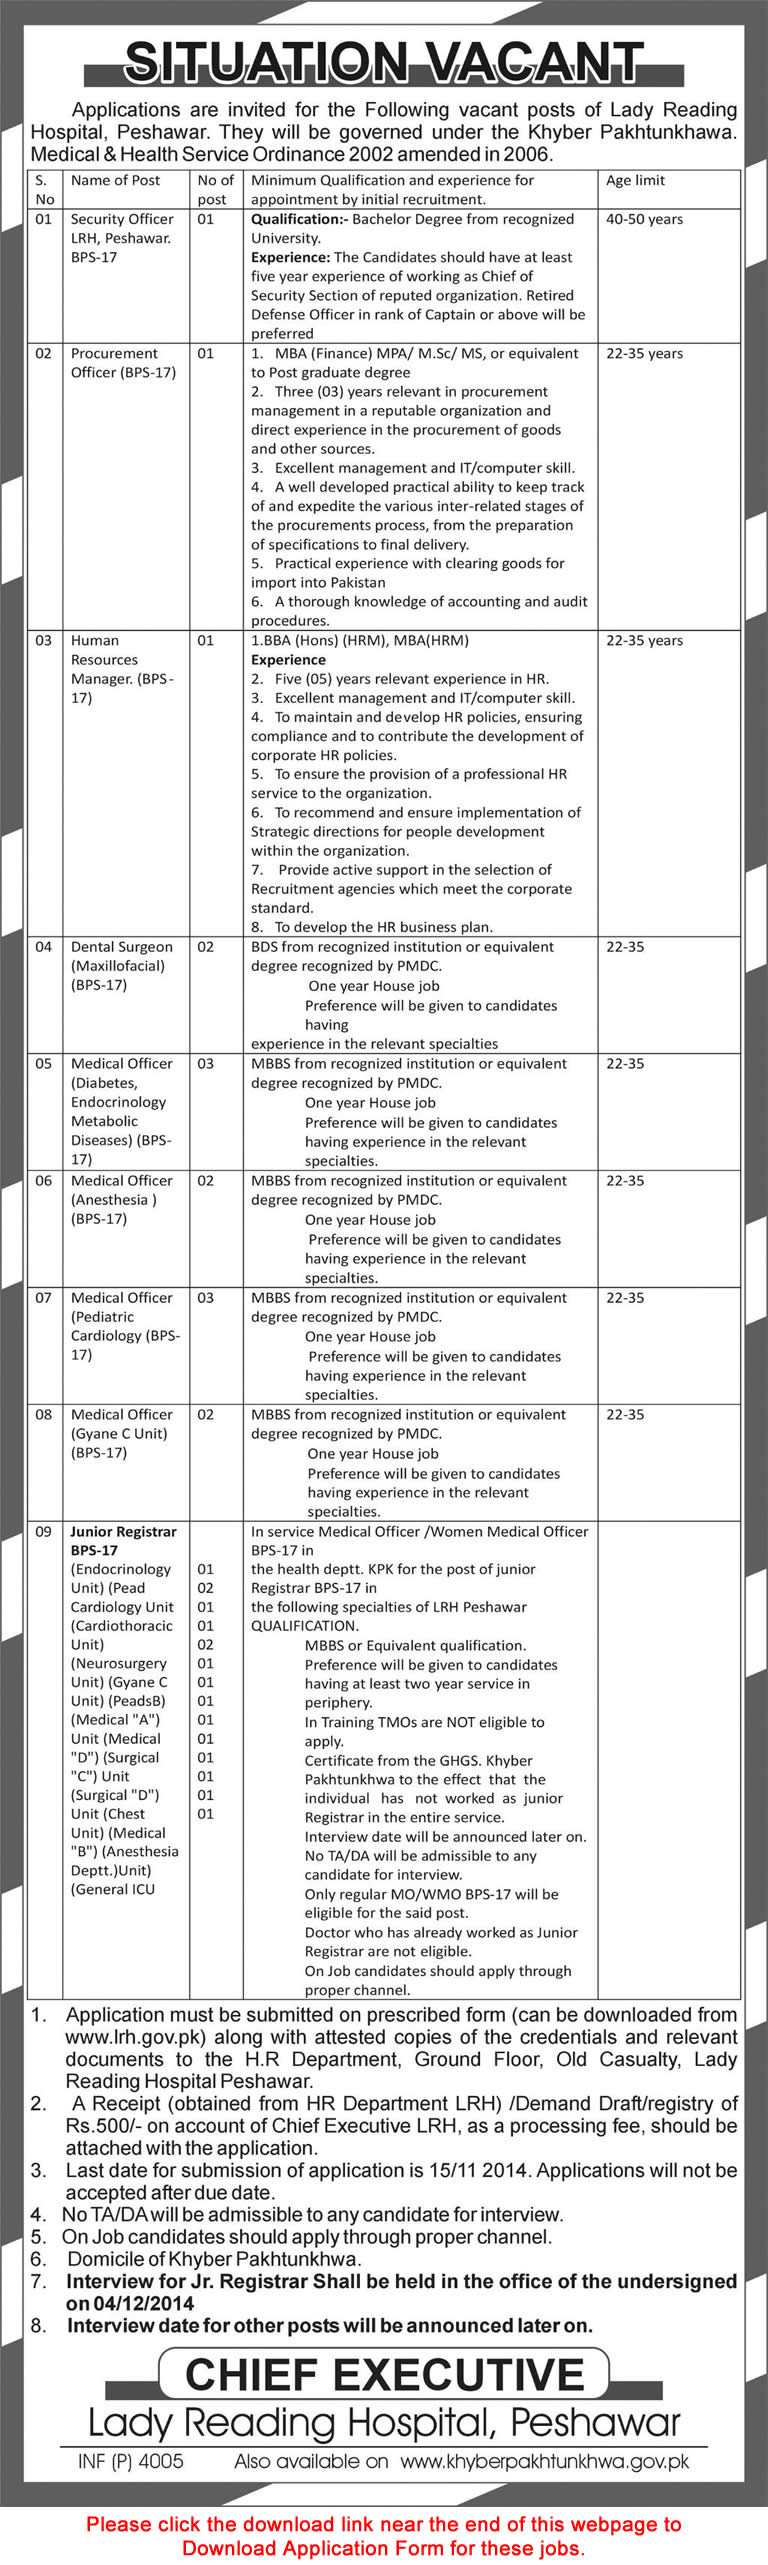 Lady Reading Hospital Peshawar Jobs 2014 November Application Form Download Latest